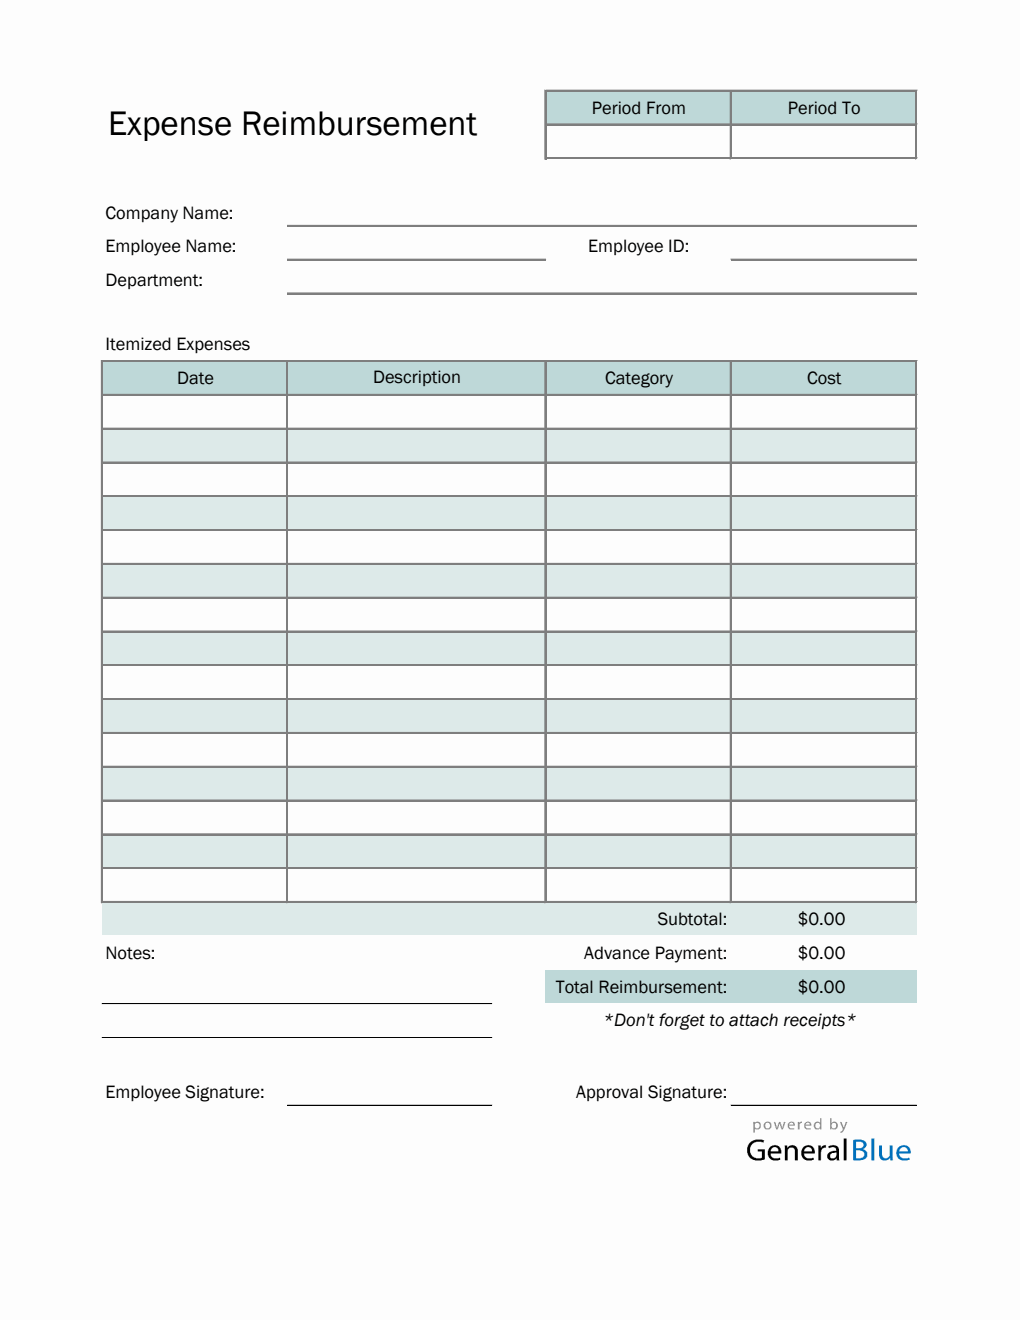 Expense Reimbursement Form in Excel (Striped)